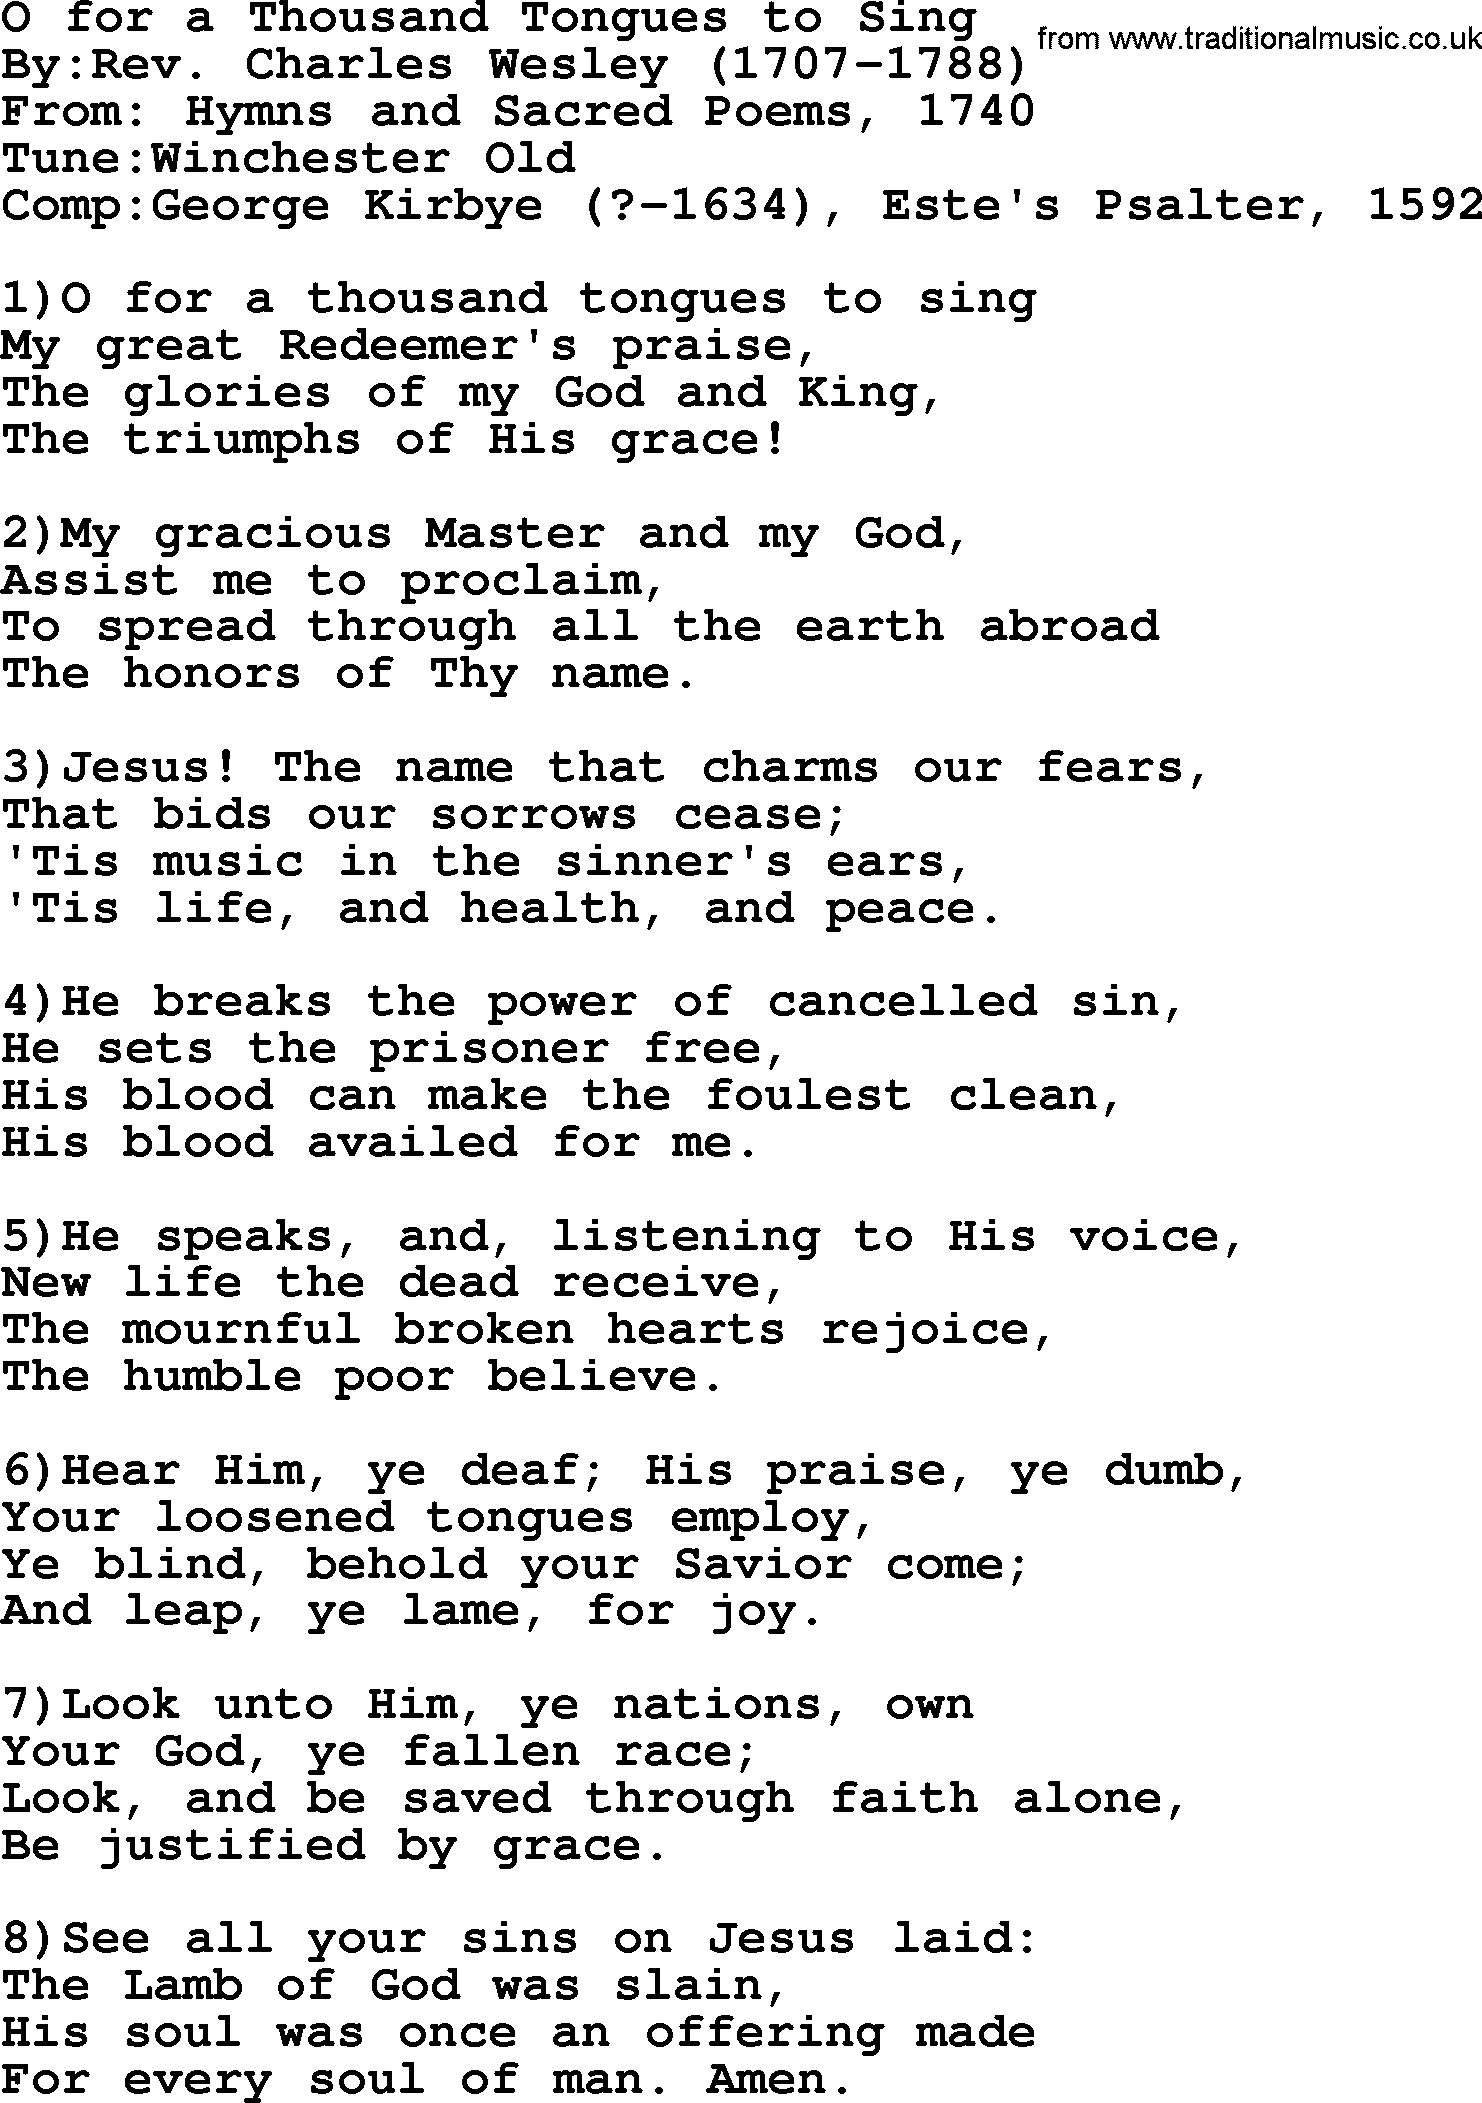 Methodist Hymn: O For A Thousand Tongues To Sing, lyrics